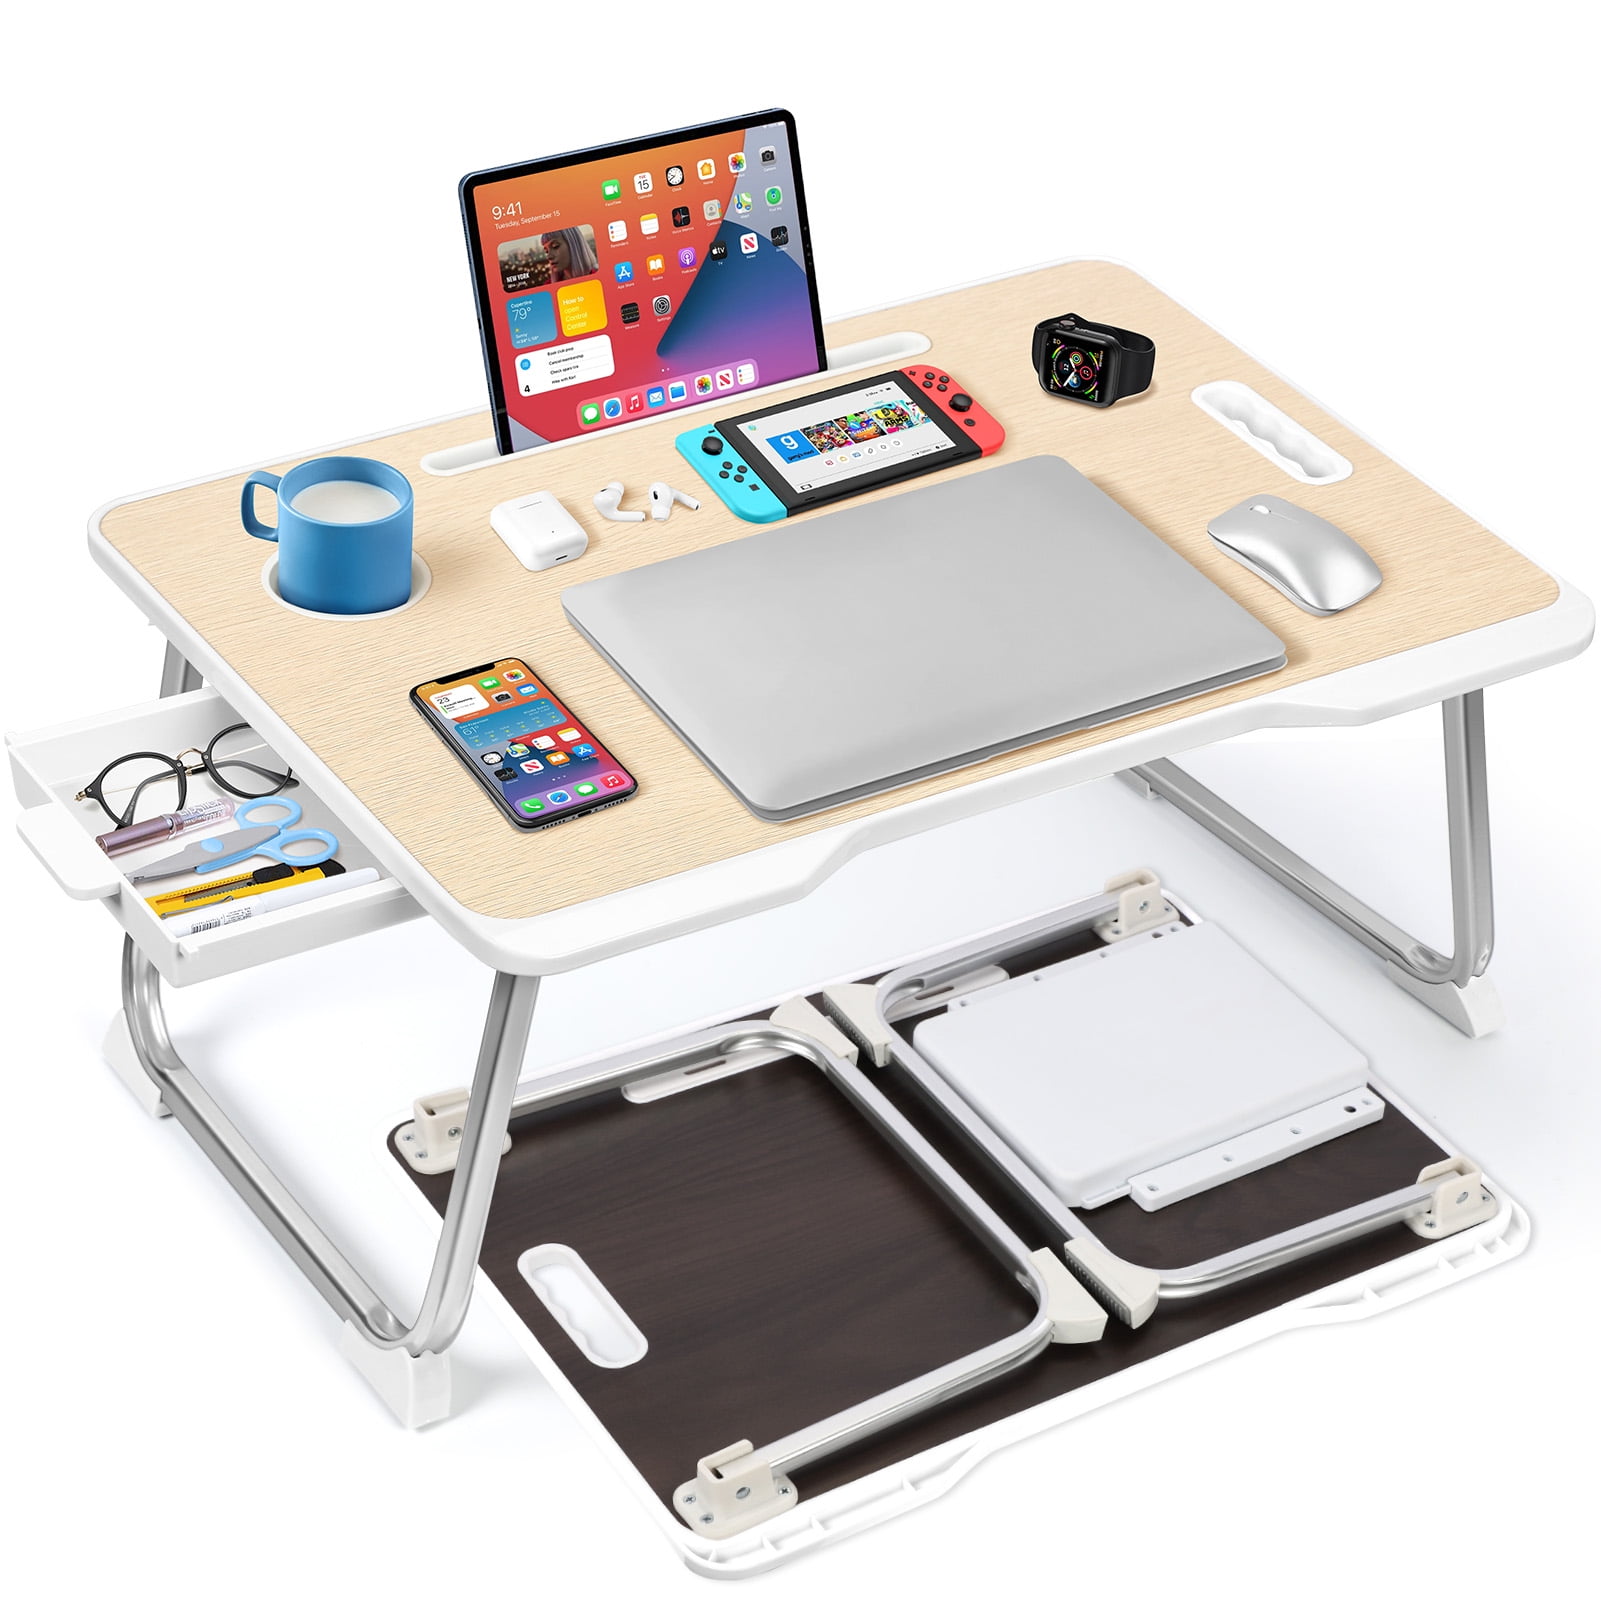 Livhil Large Lap Desk for Bed, Laptop Table, Portable Desk, Bed Laptop Desk,  for Bed, Desk, Laptop, Writing, Computer Bed Table for Laptop